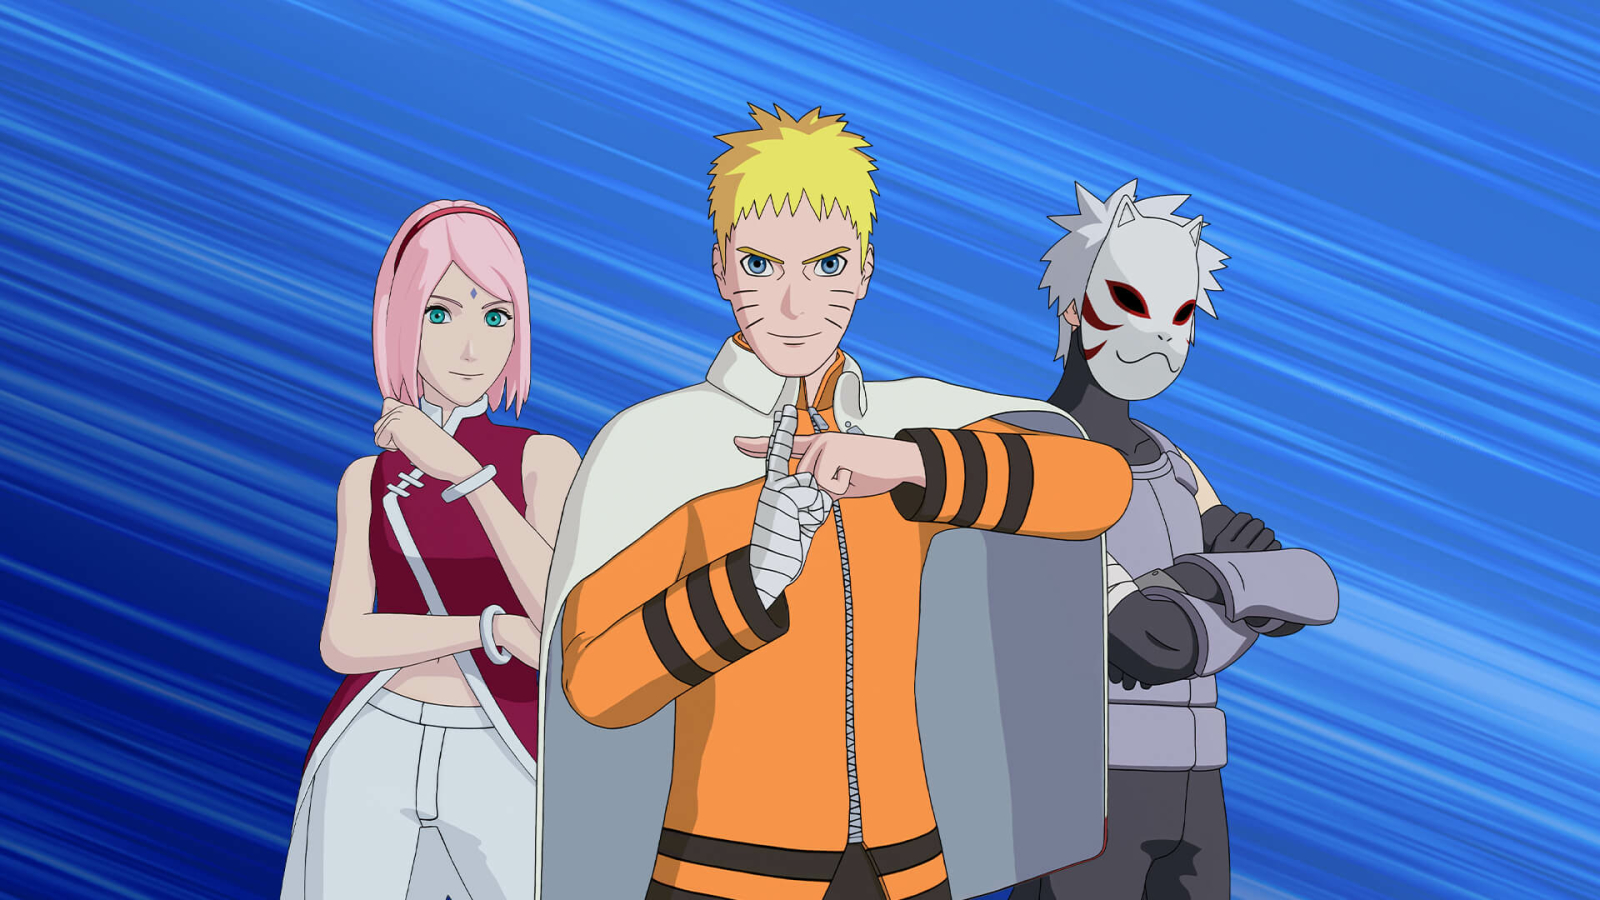 Fortnite Naruto - Original image